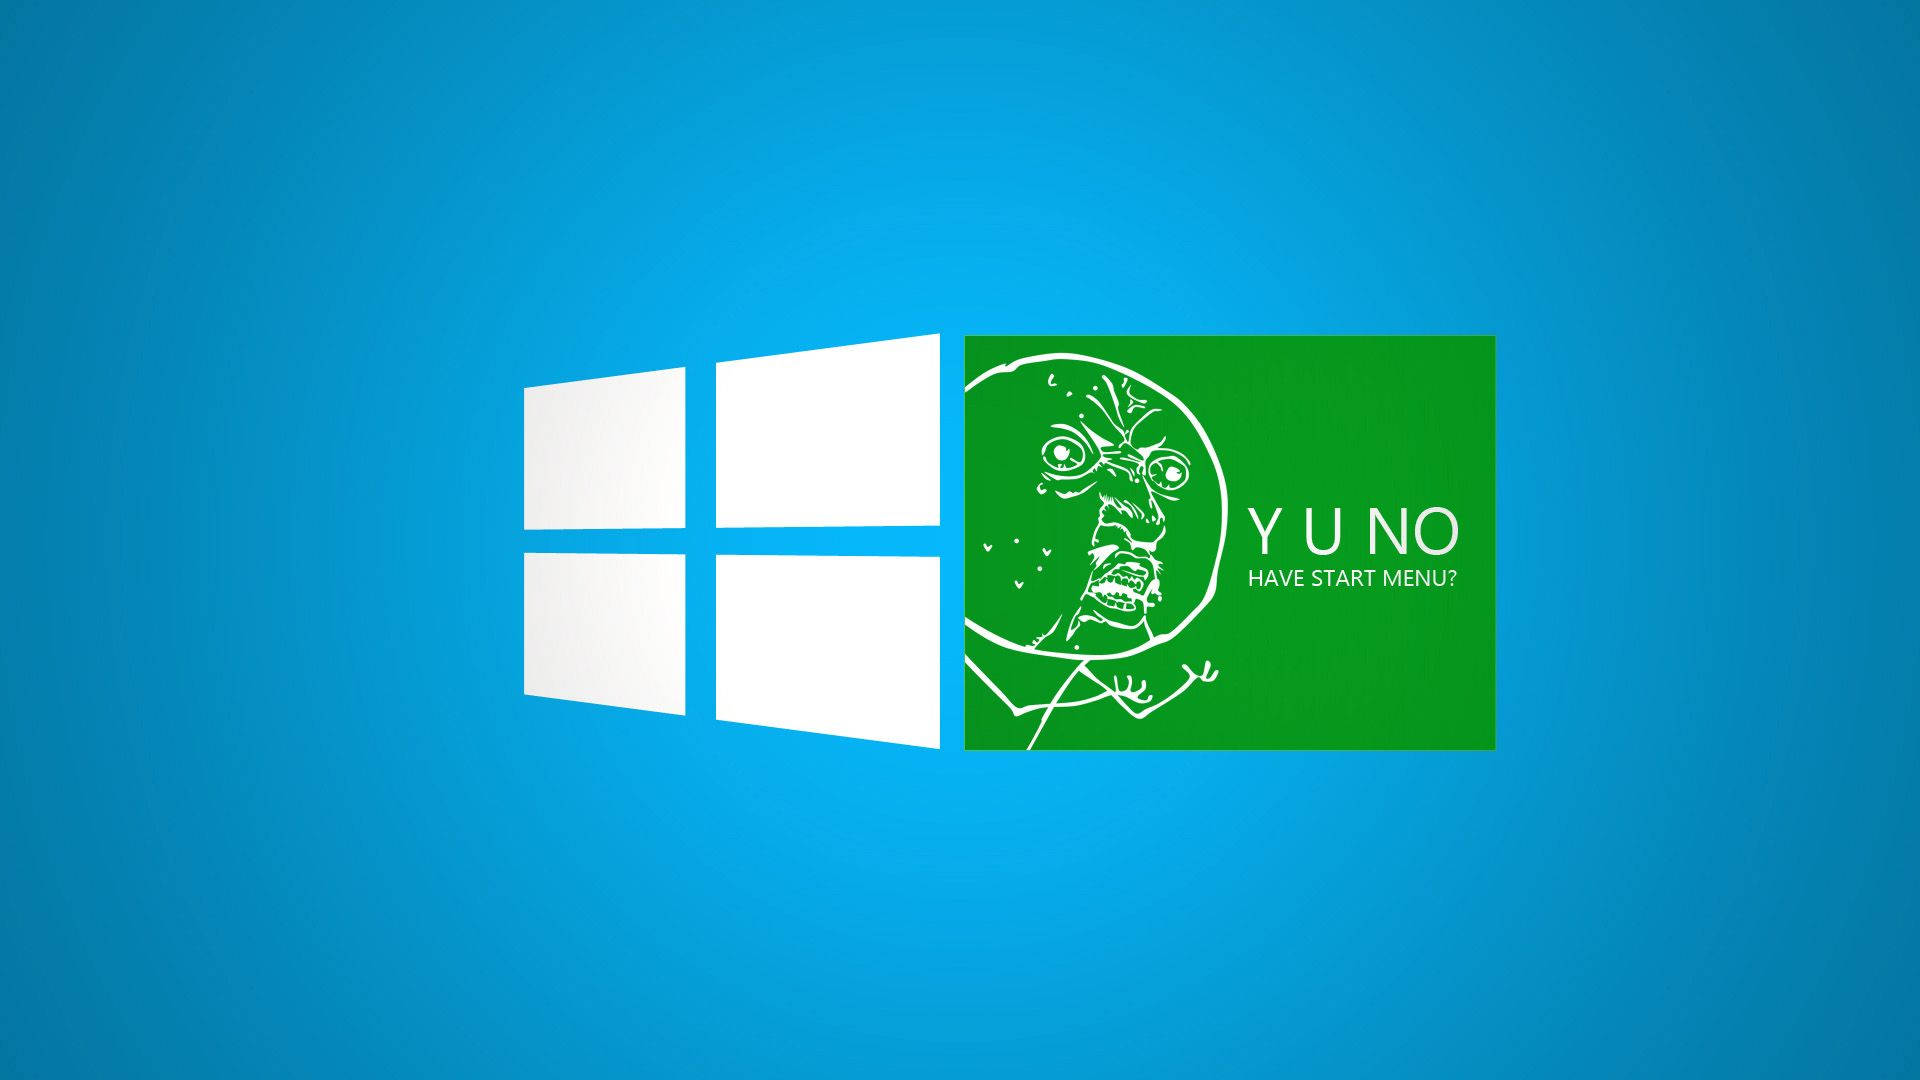 Windows 10 Y U No Guy Dank Meme Wallpaper